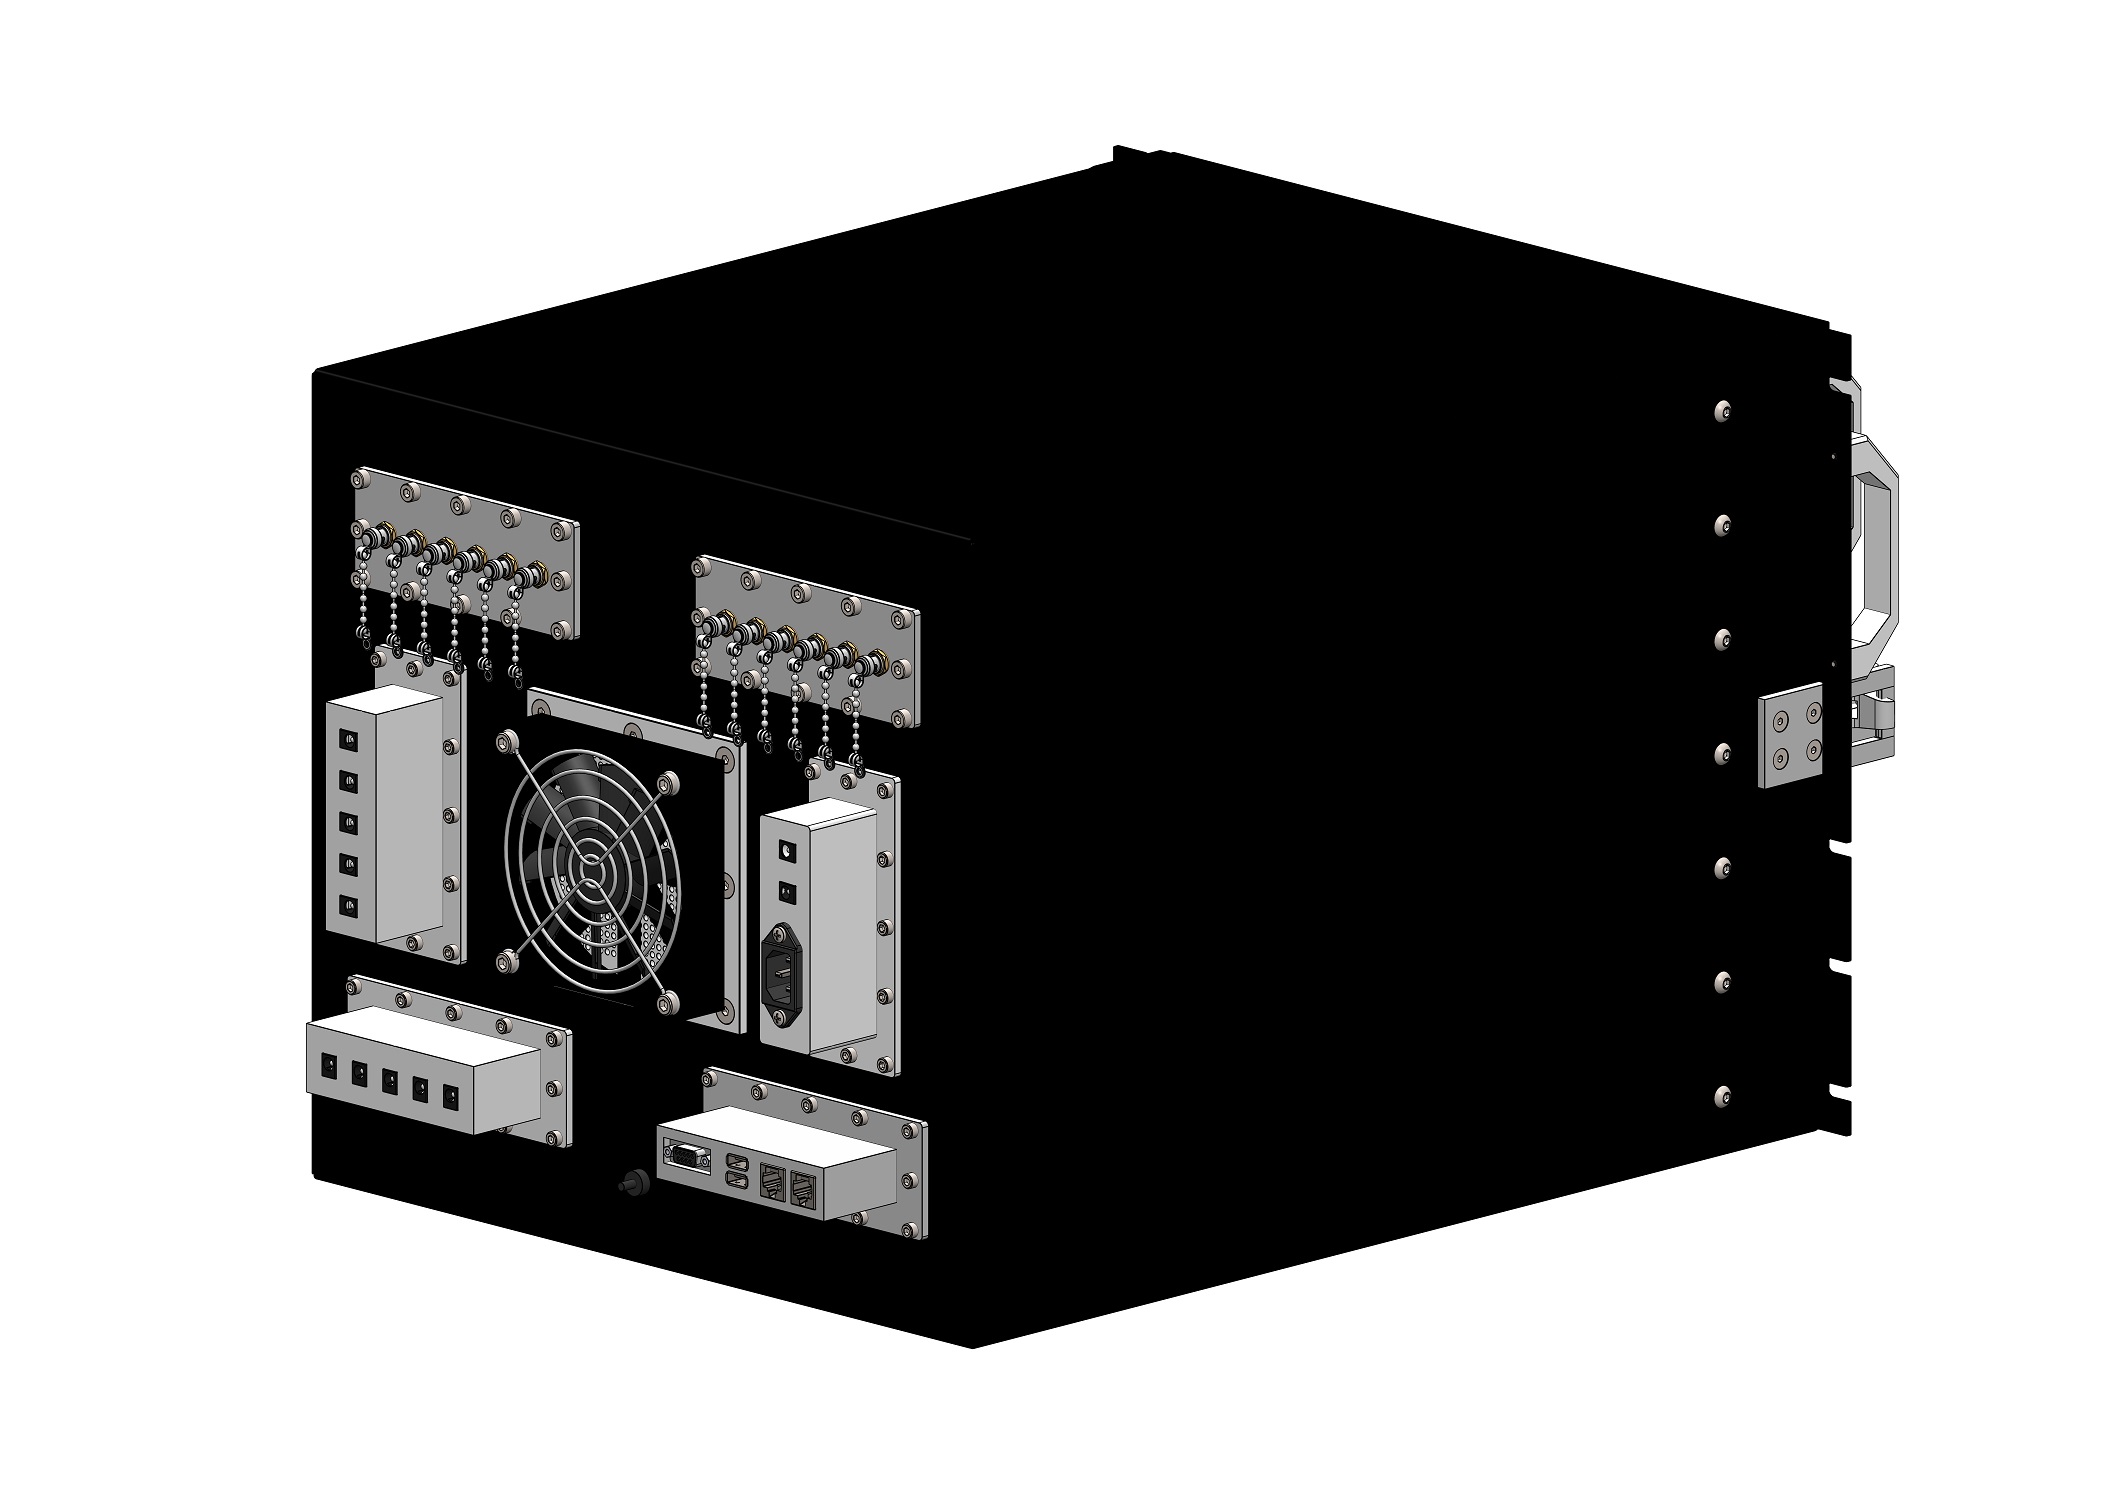 HDRF-1560-R2 RF Shield Test Box